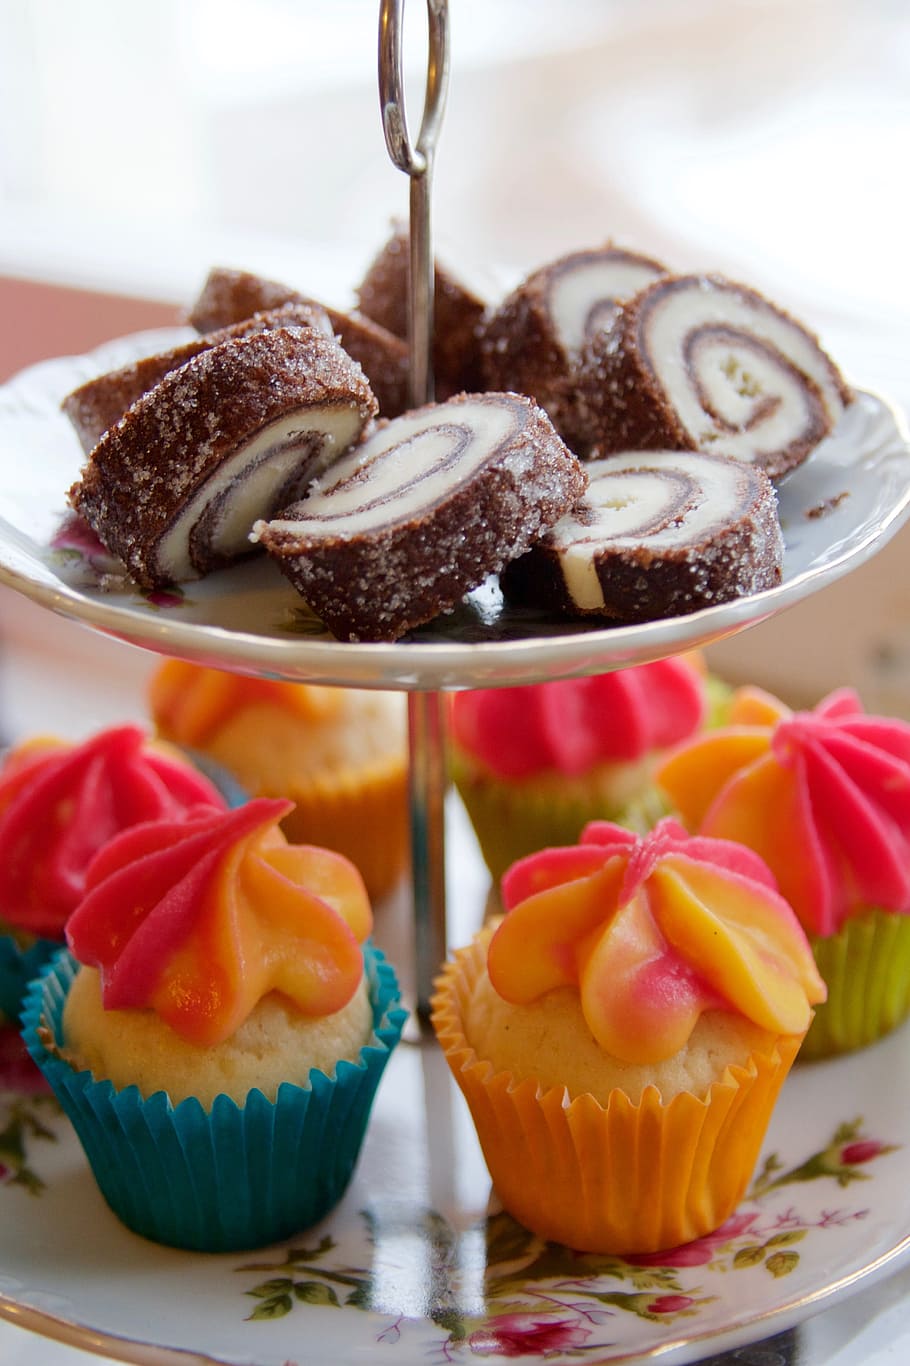 Cupcake, Miniature, Food, Pastry, Cake, miniature food, dessert, sweet, tasty, muffin